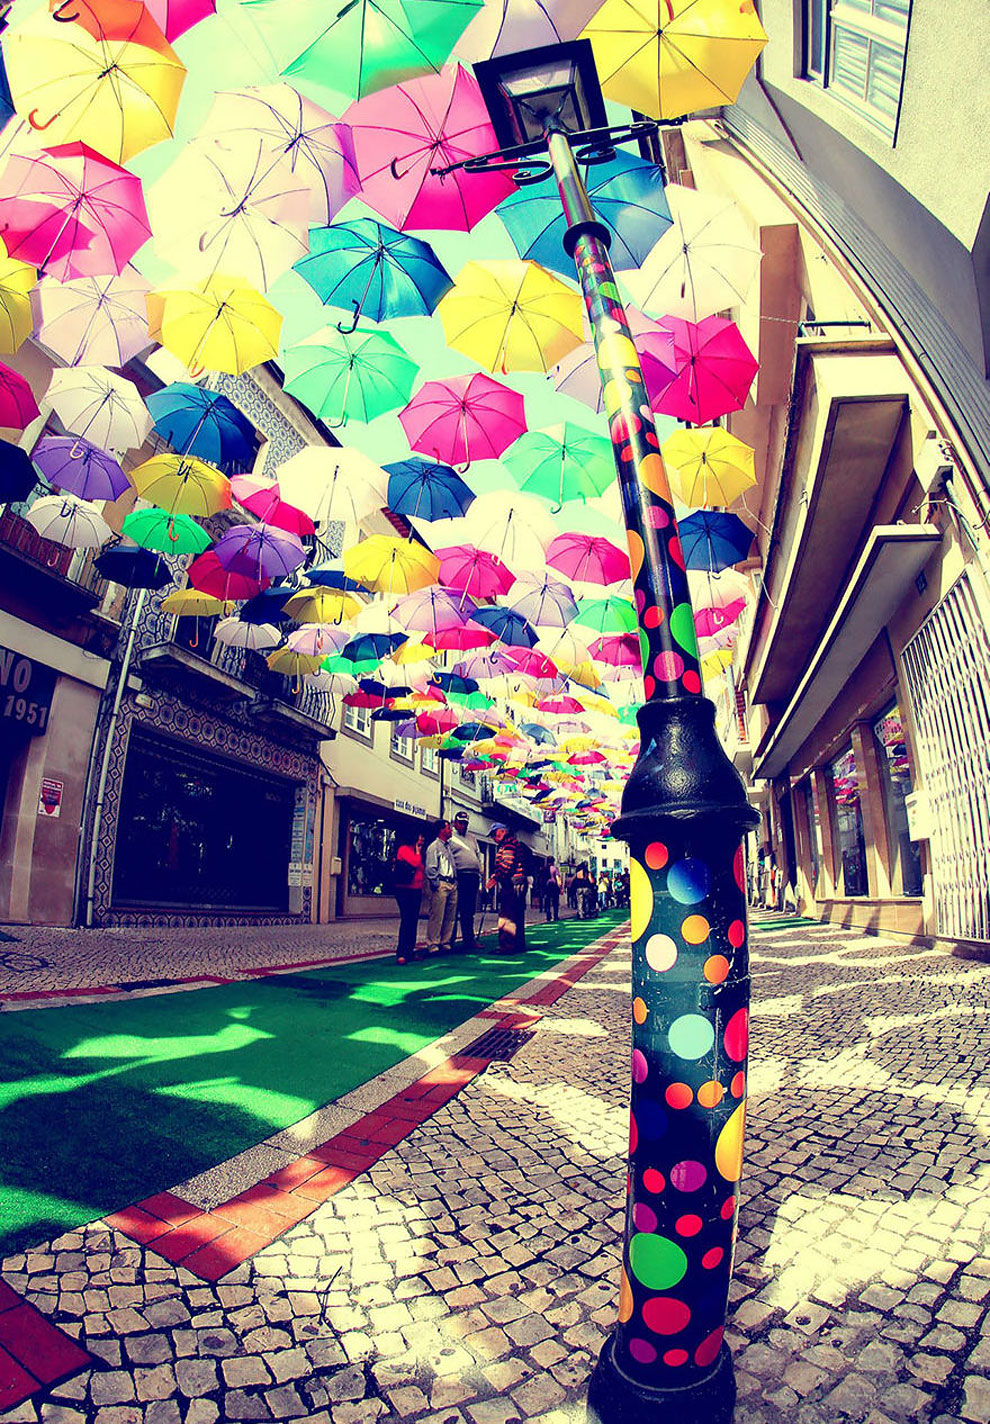 744 Umbrella Sky in Agueda, Portugal